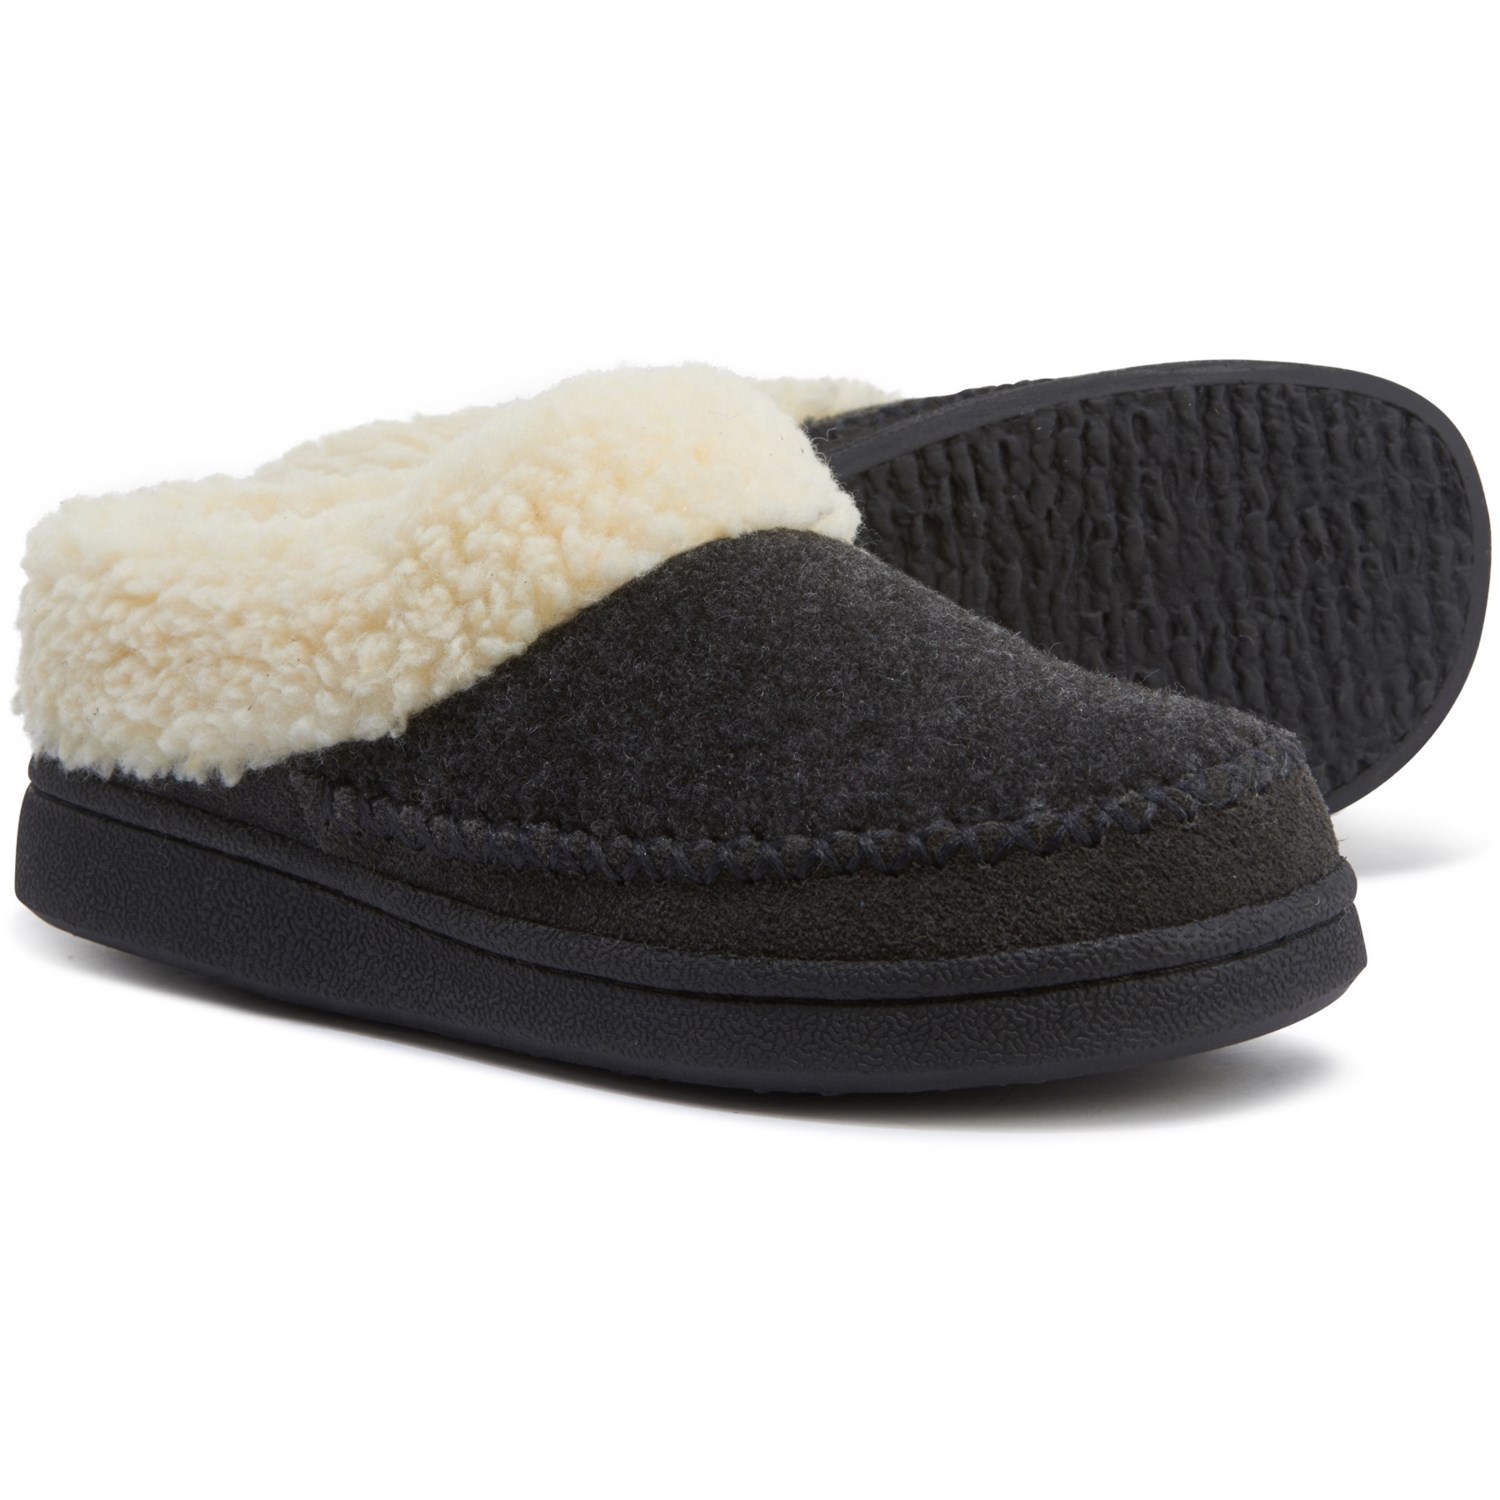 sherpa womens slippers